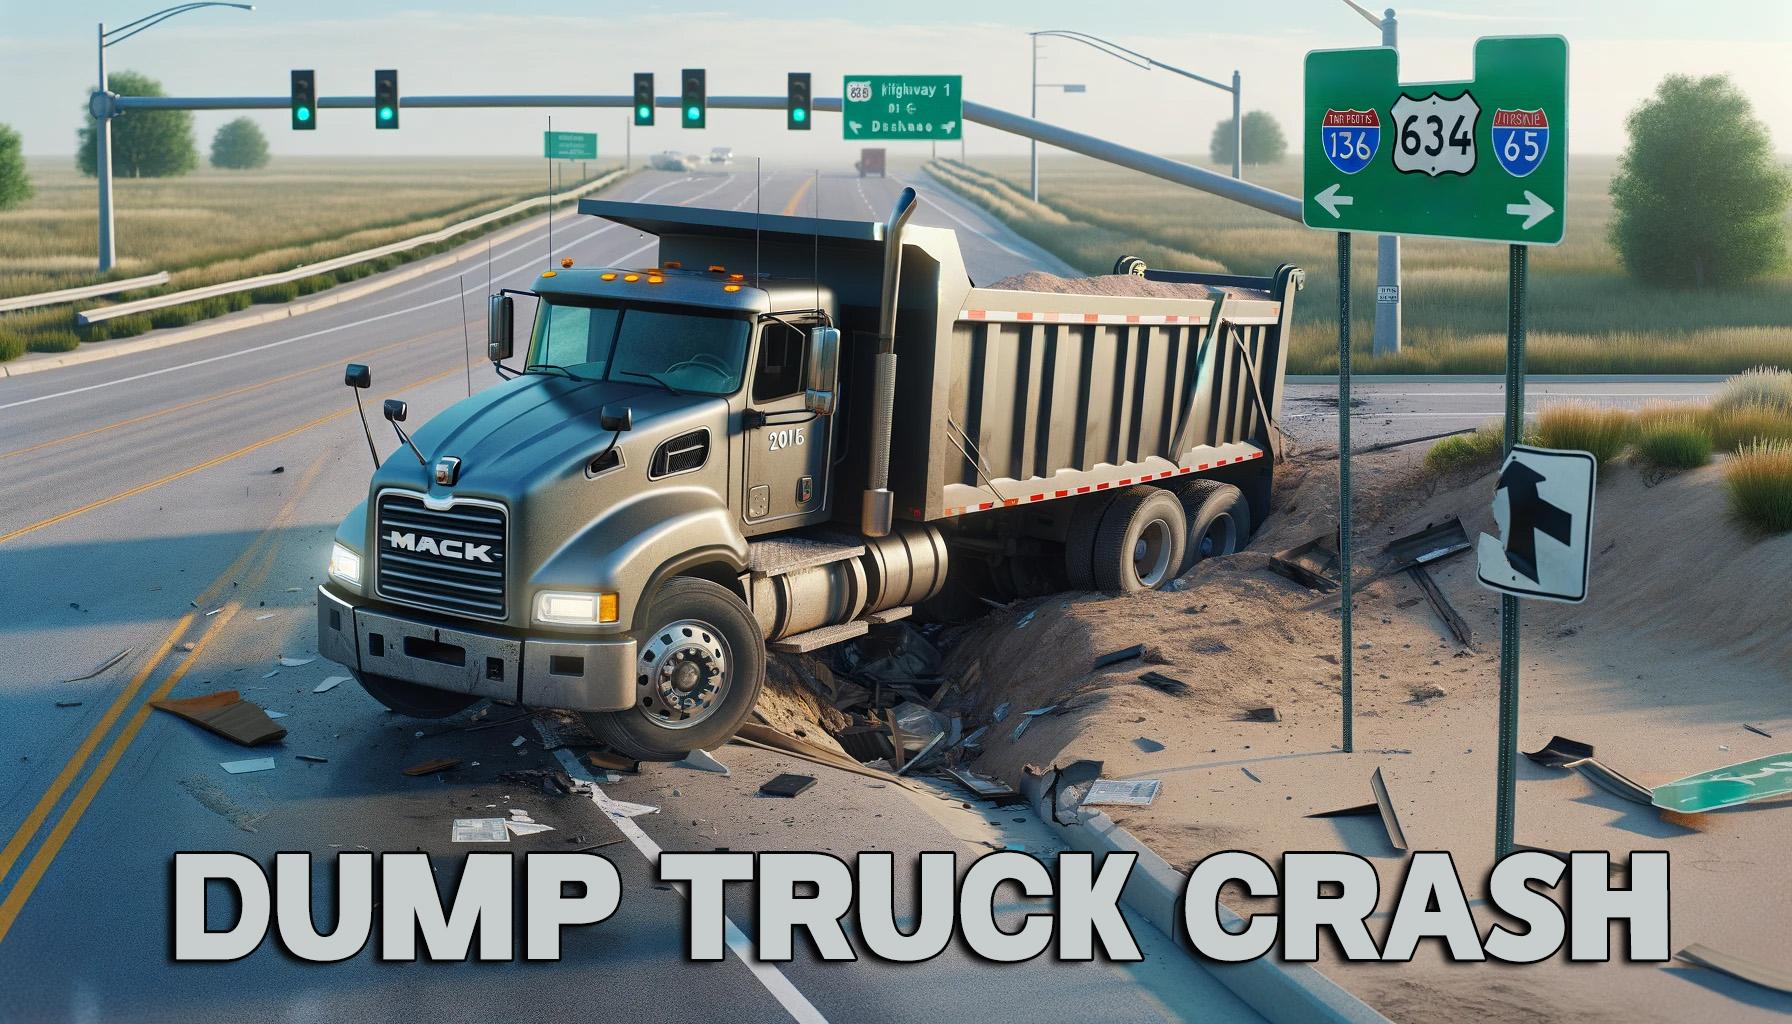 Mack dump truck crash at intersection news graphhic